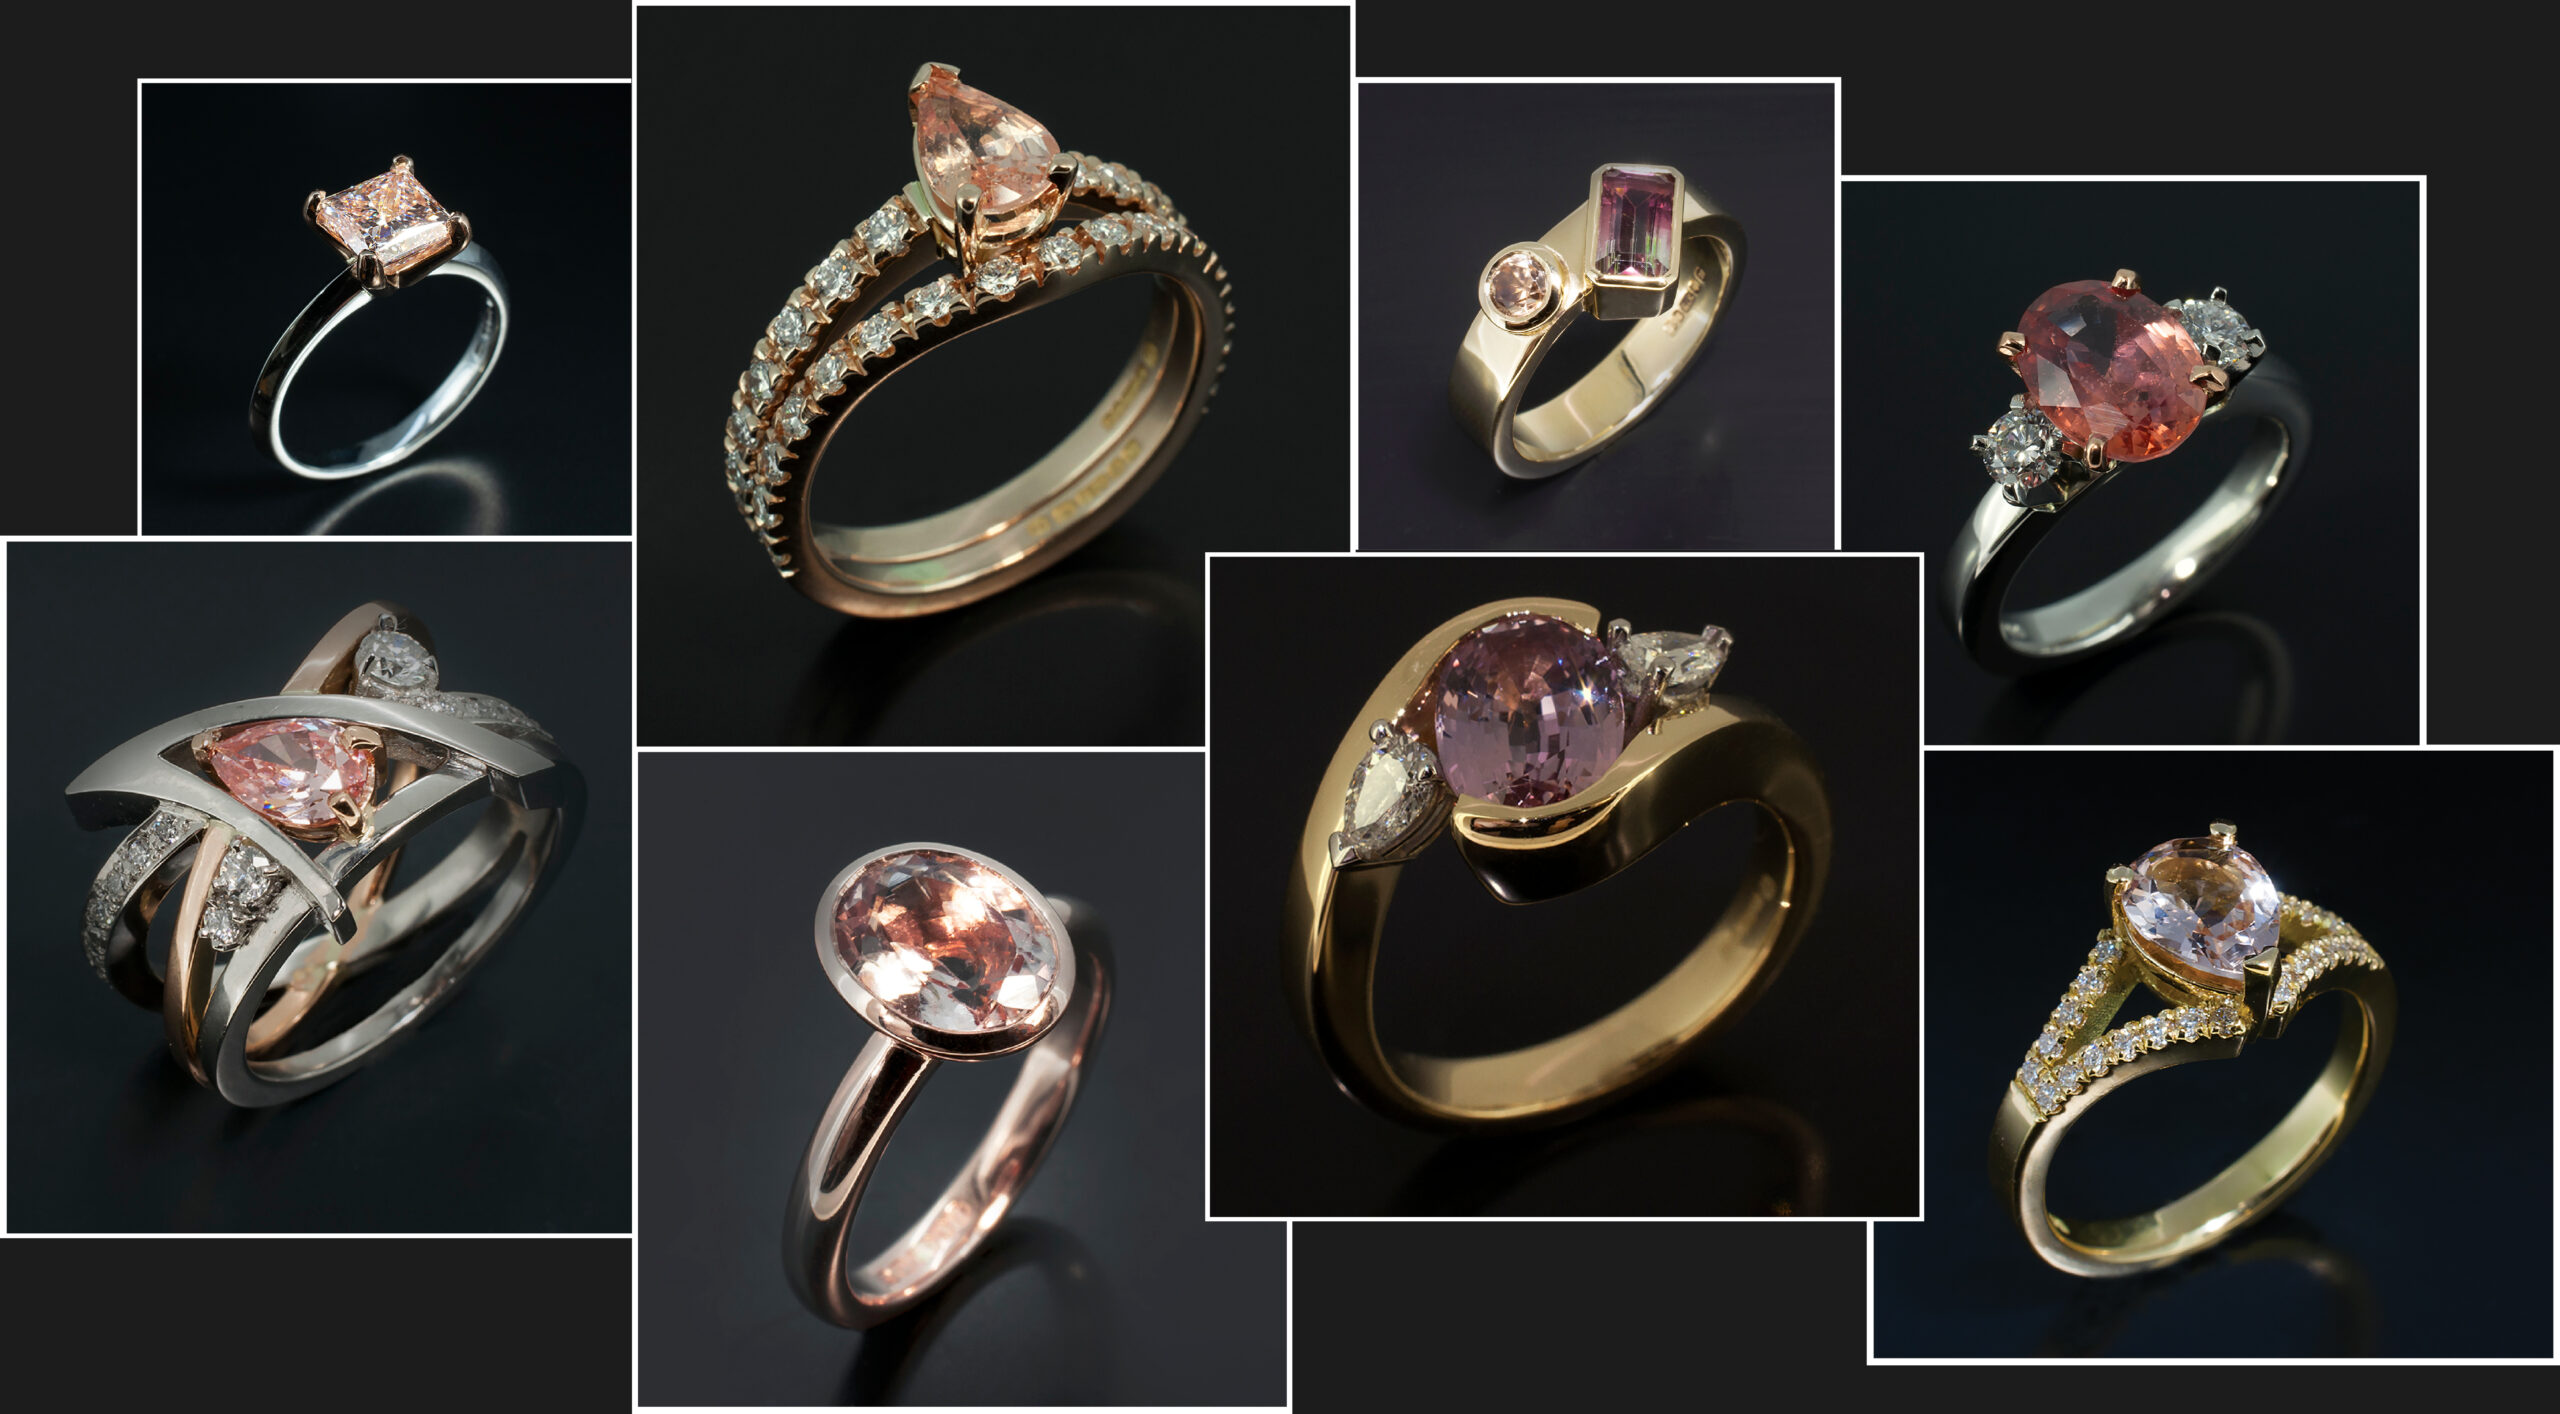 bespoke coloured diamond and gemstone rings by Blair and Sheridan